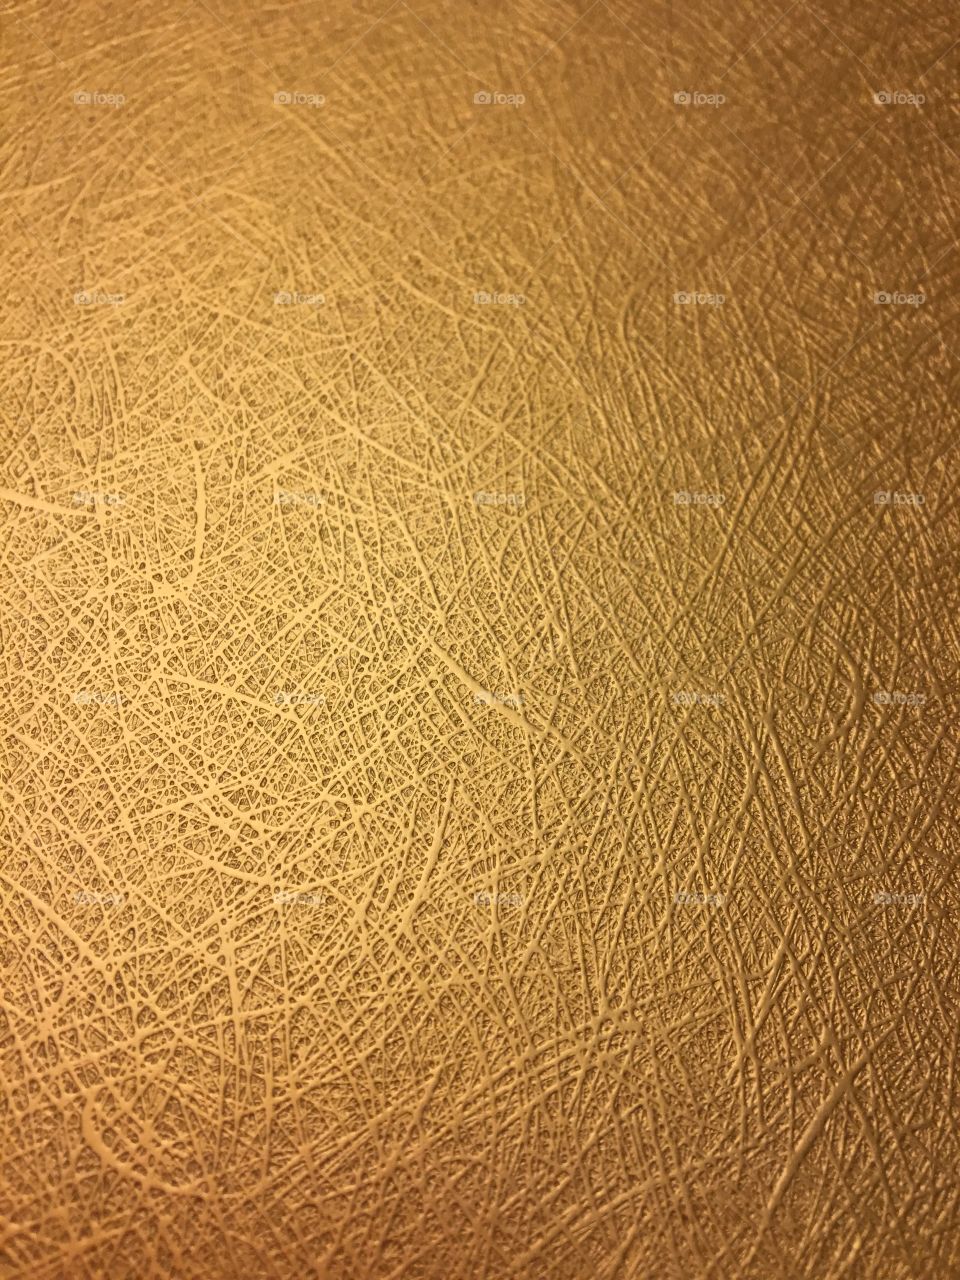 Textured gold scrapbook paper. 